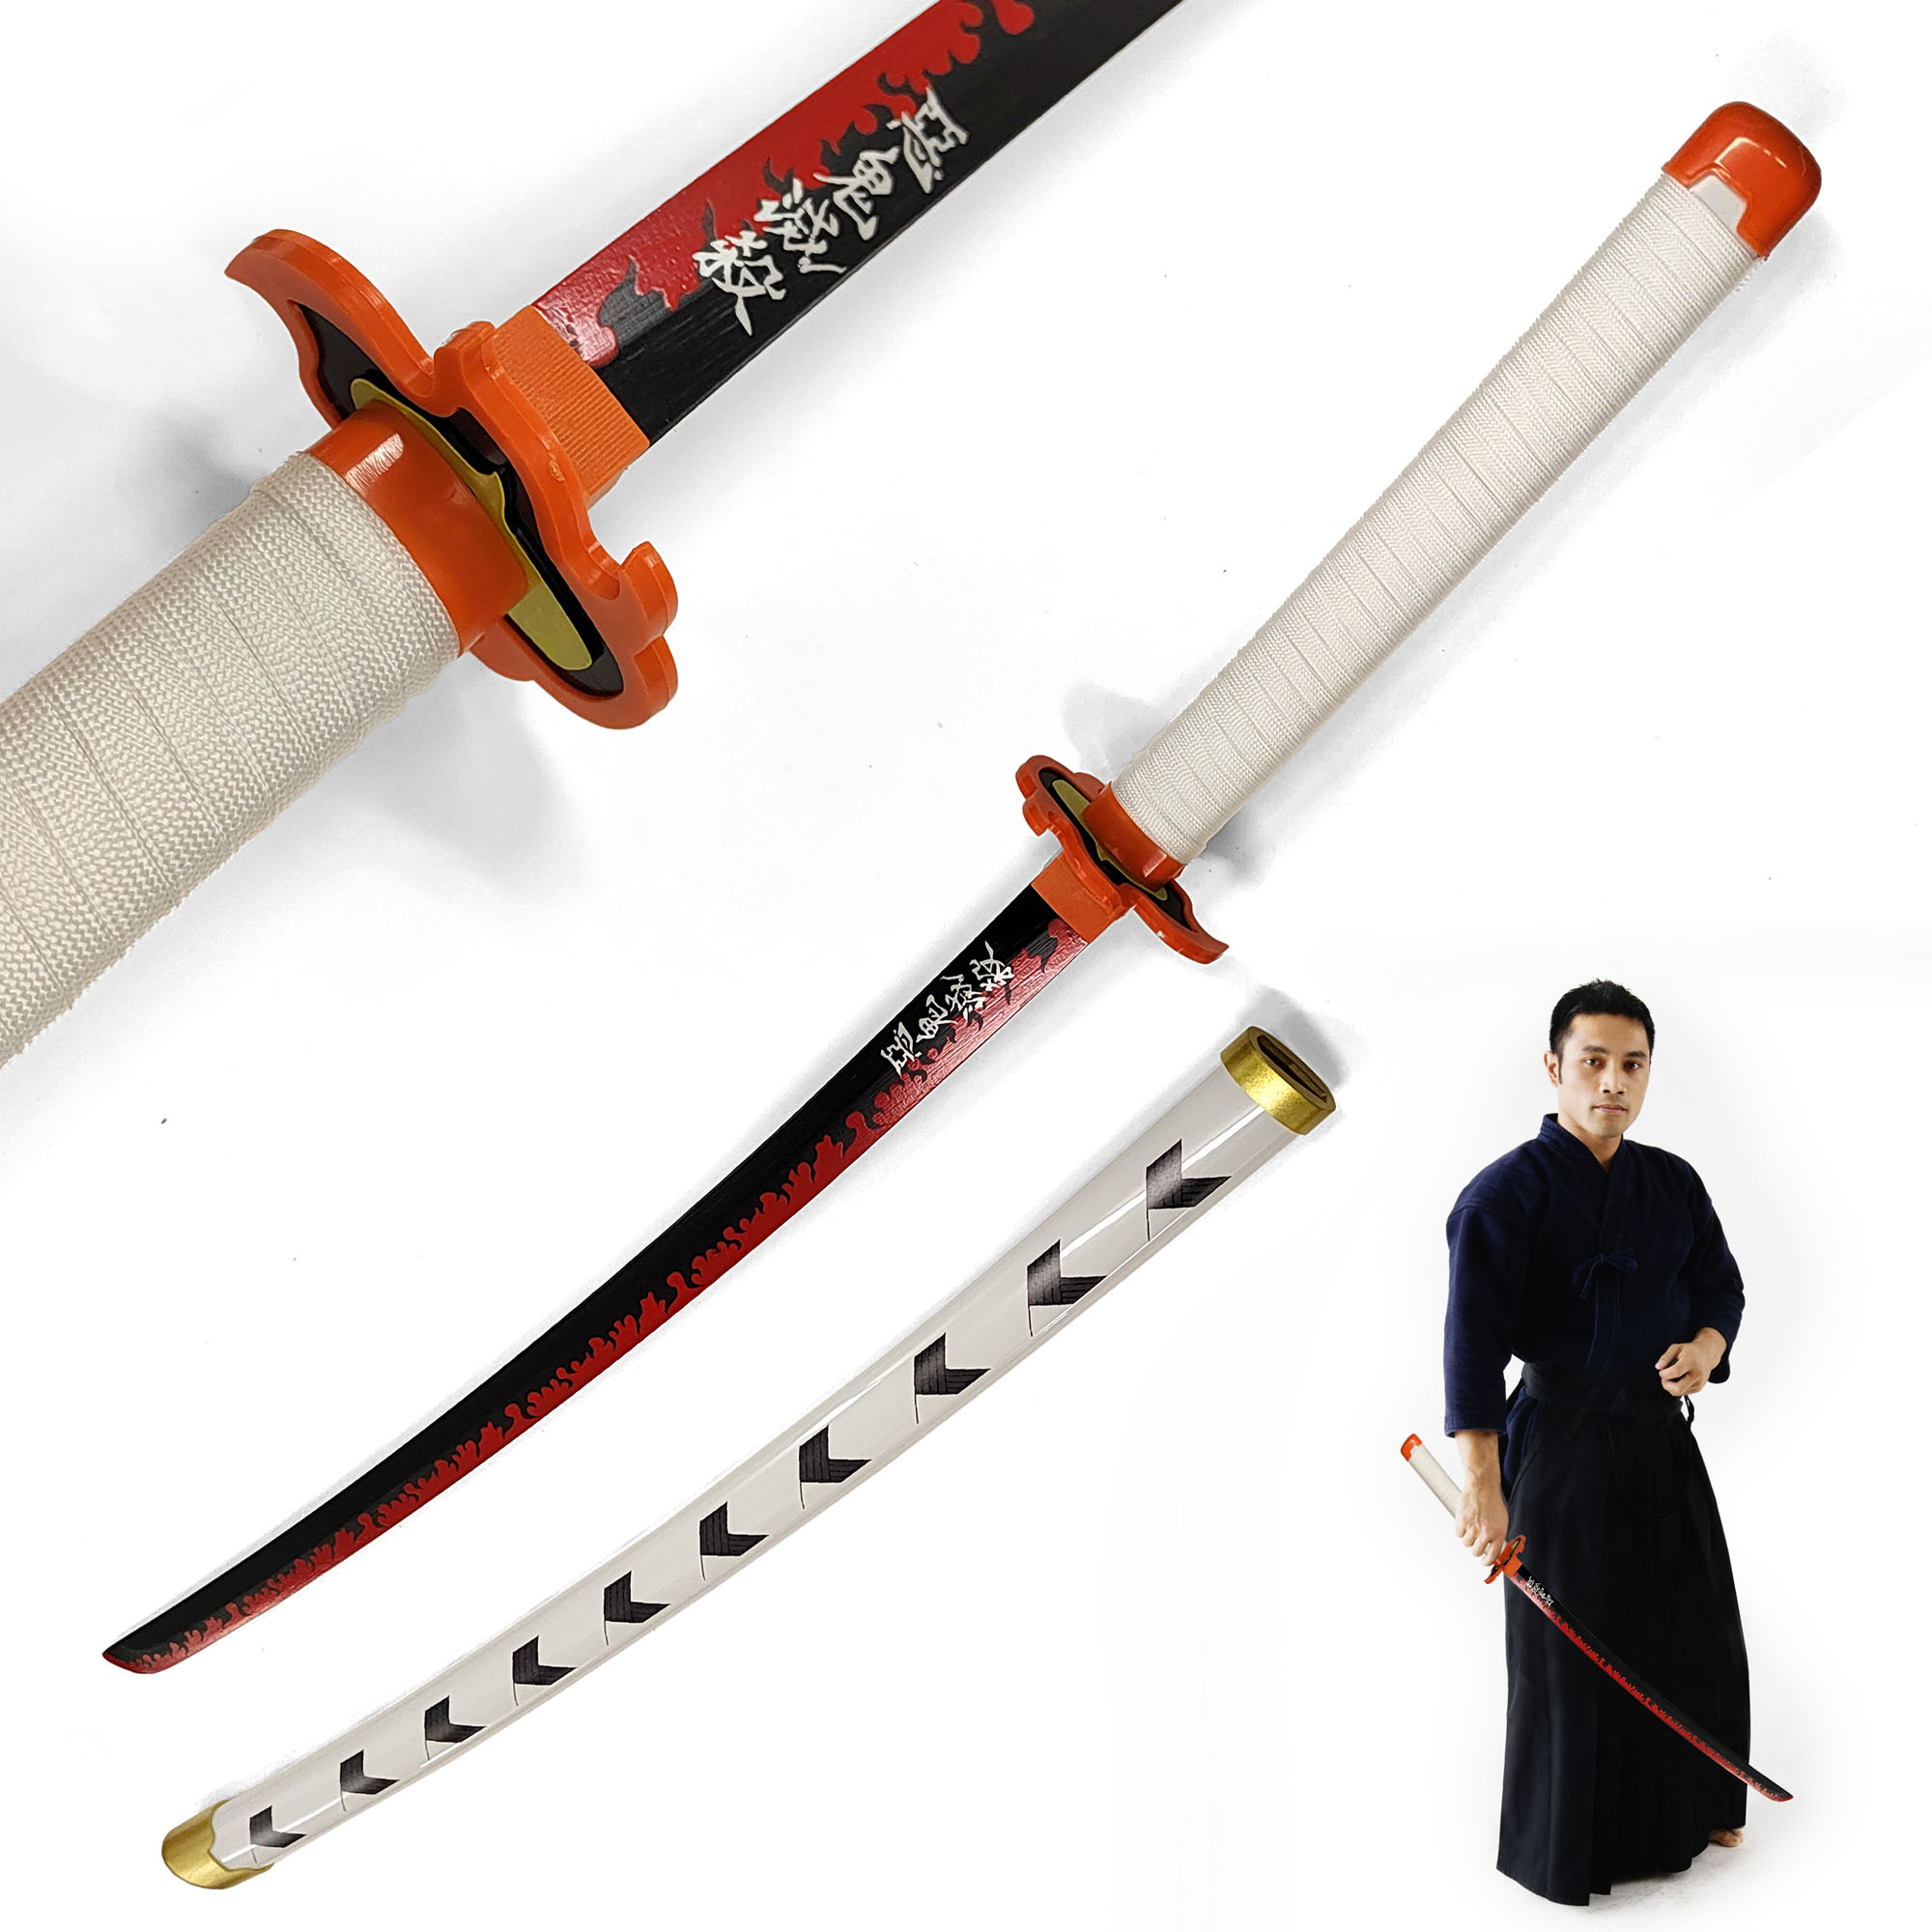 Demon Slayer - Rengoku Kyojuro sword made of wood with scabbard